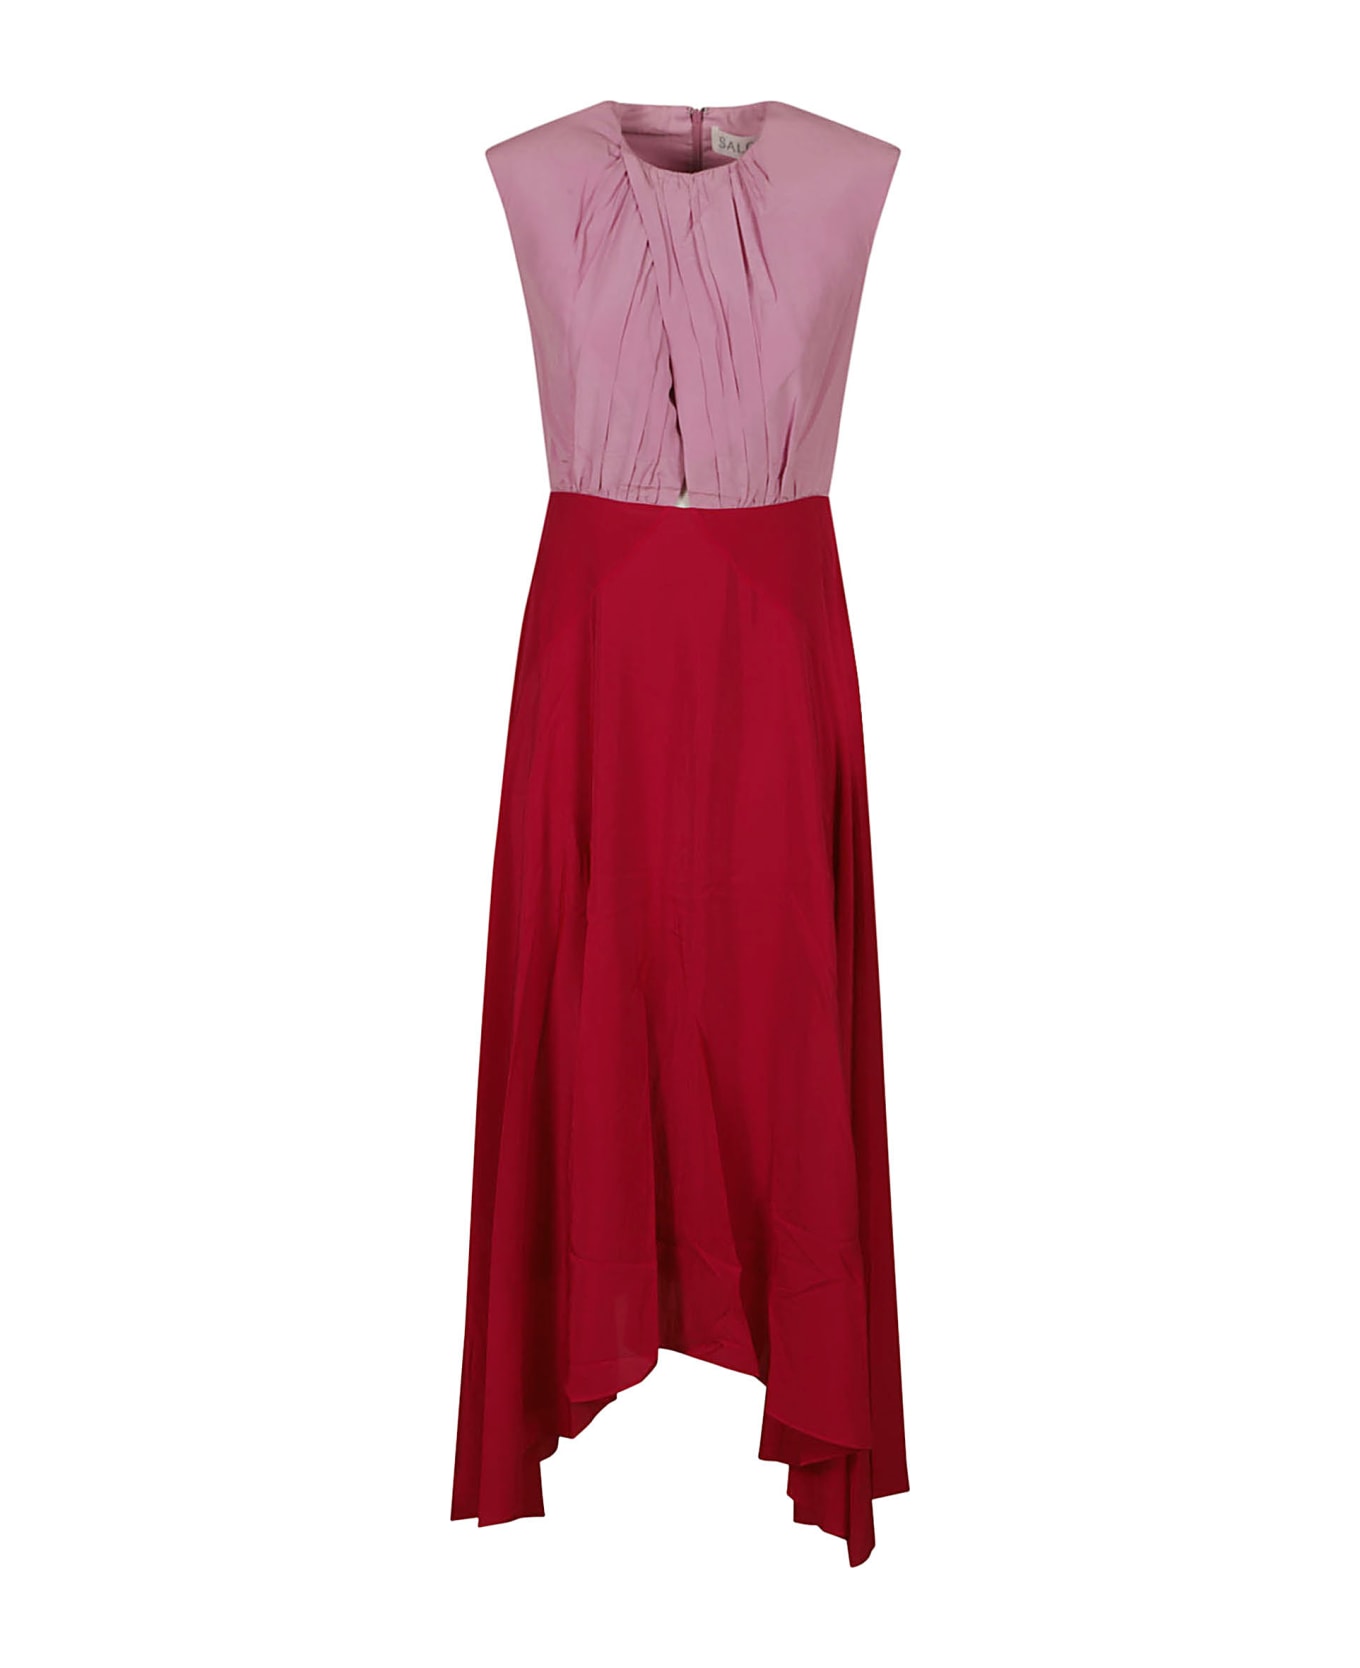 Saloni Divya Dress - Light Peony/Raspberry